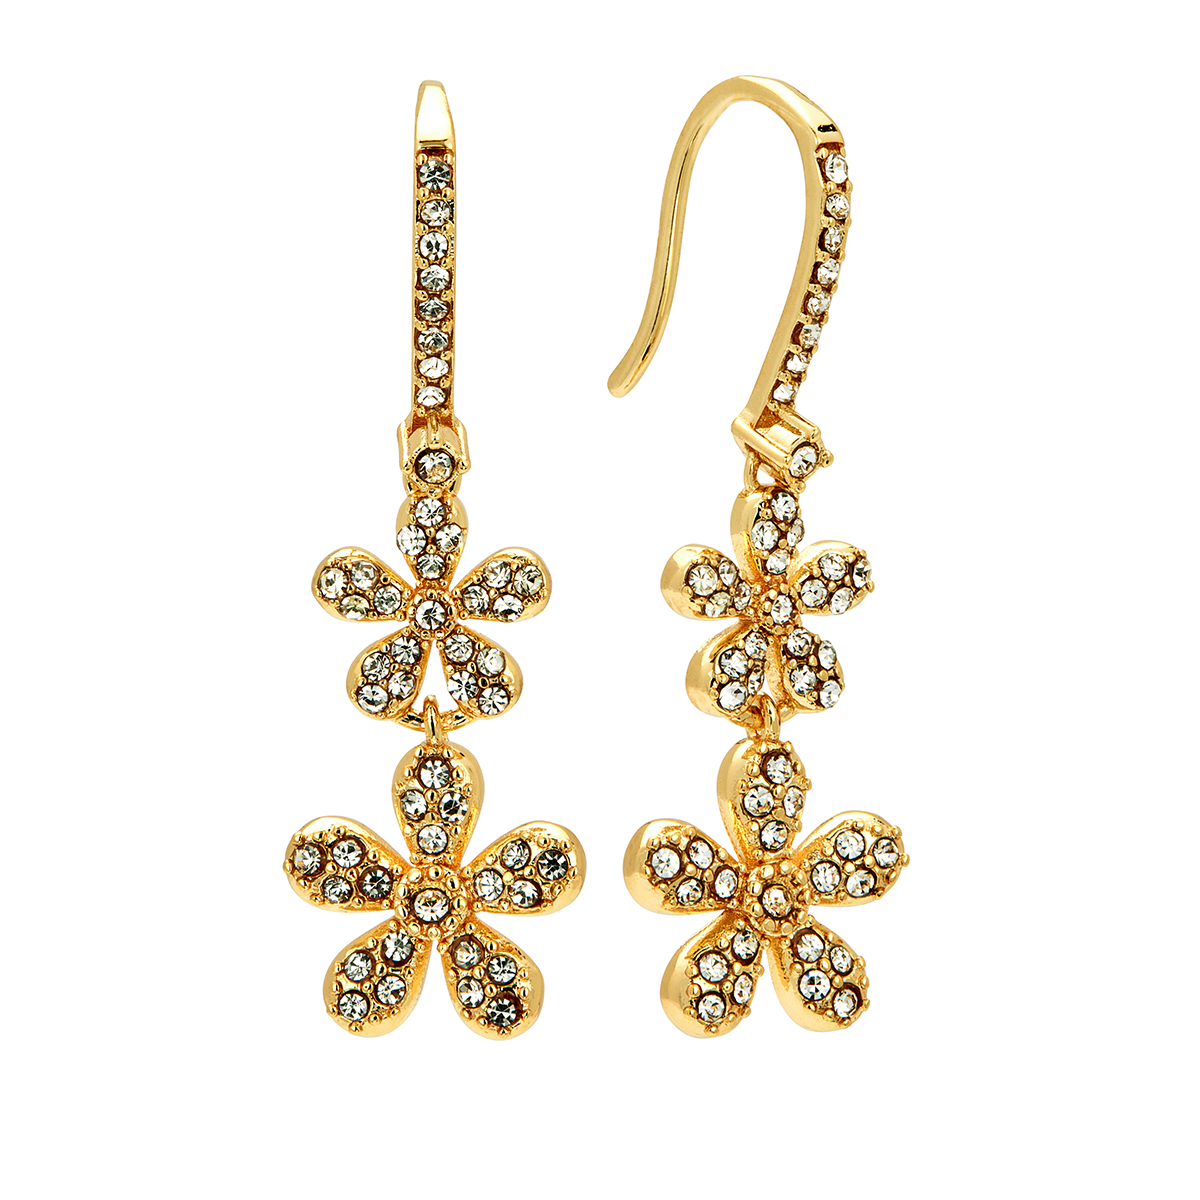 Marsala Gold Plated Clear Crystal Flower Drop Earrings